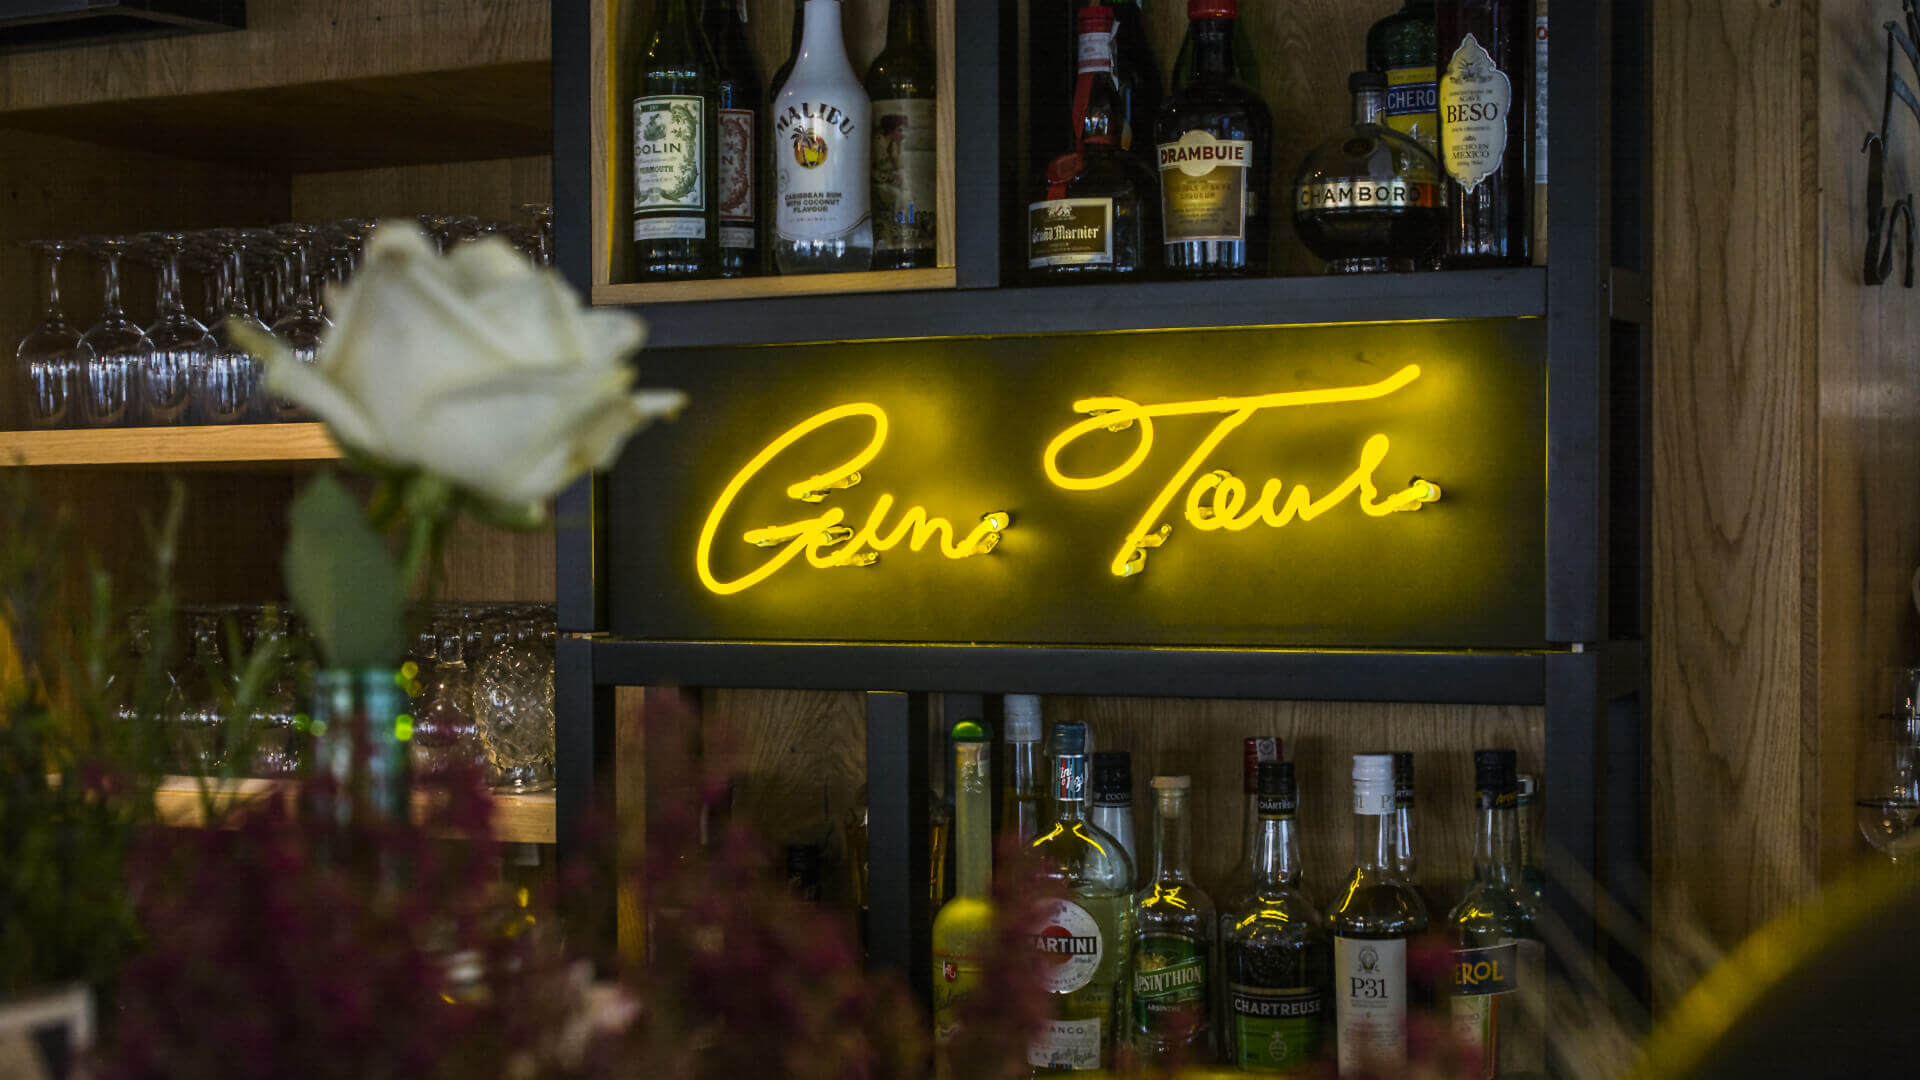 Gintur Gin tour - Gin-tour-neón-detrás-del-bar-restaurante-neón-en-la-pared-debajo-del-cristal-neón-de-la-empresa-logo-neón-dentro-delas-botellas-cafetería10-gdansk (21) 